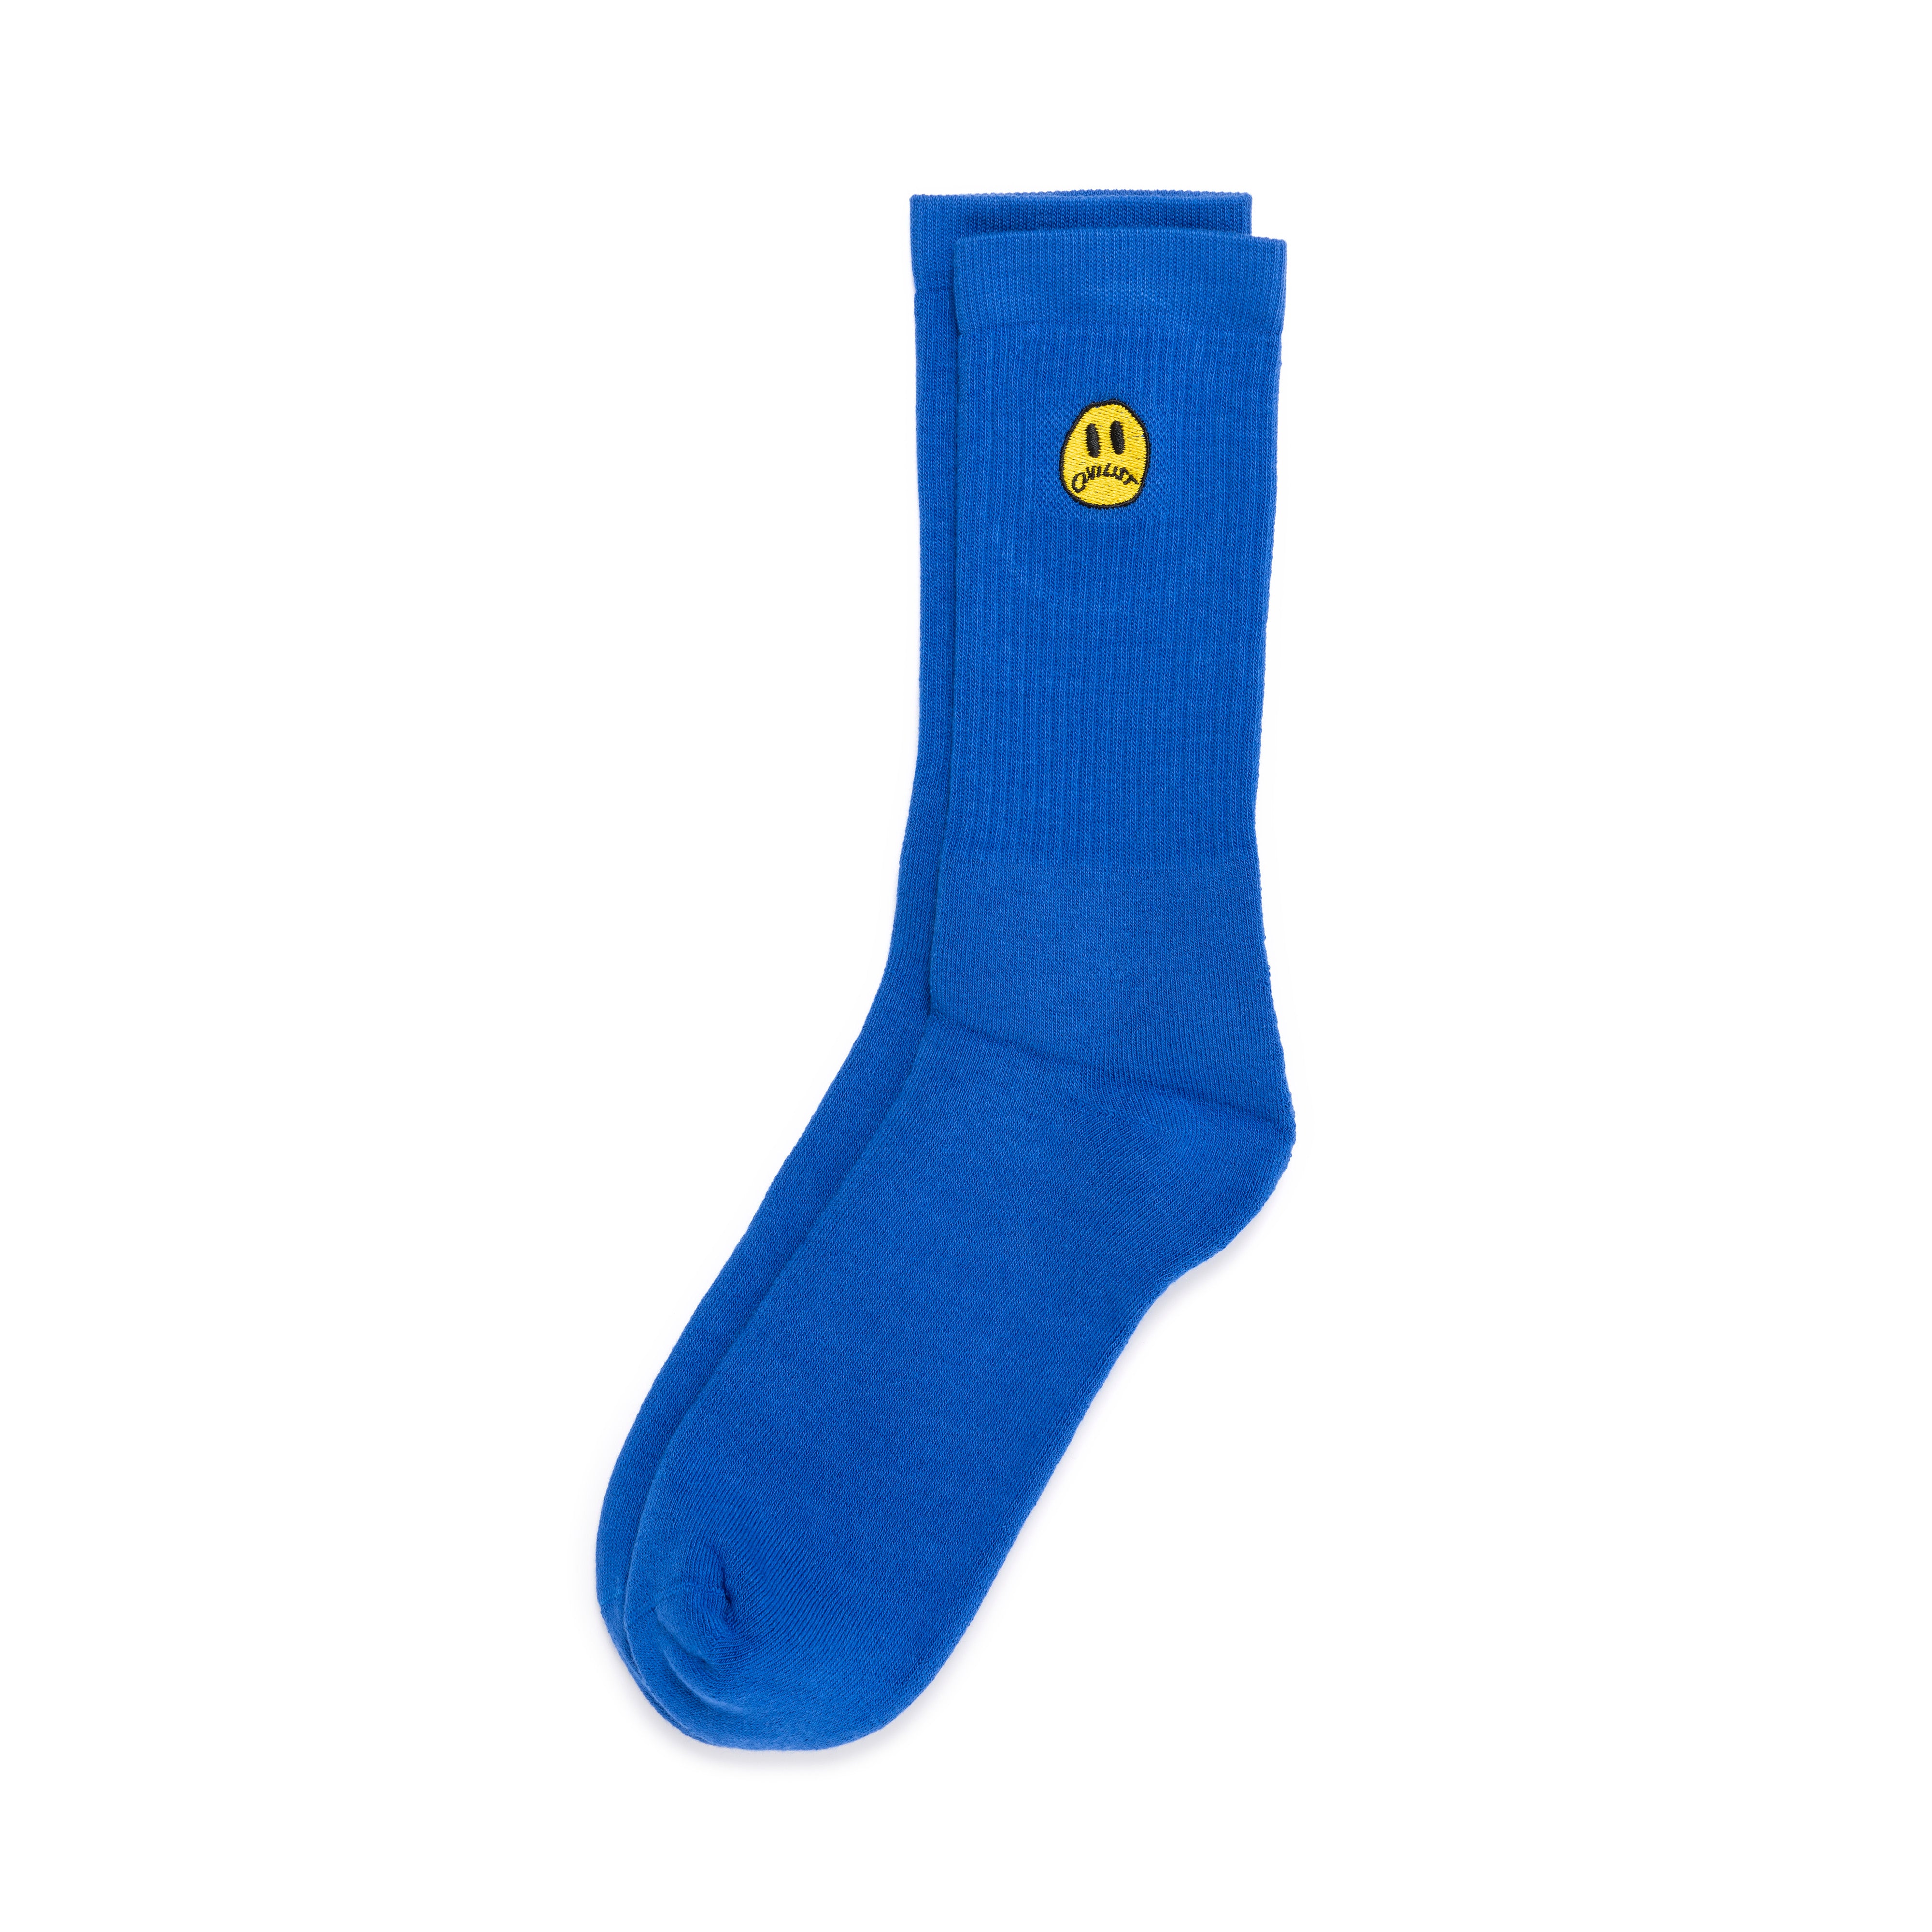 Civilist Mini Smiler Socks - Blue